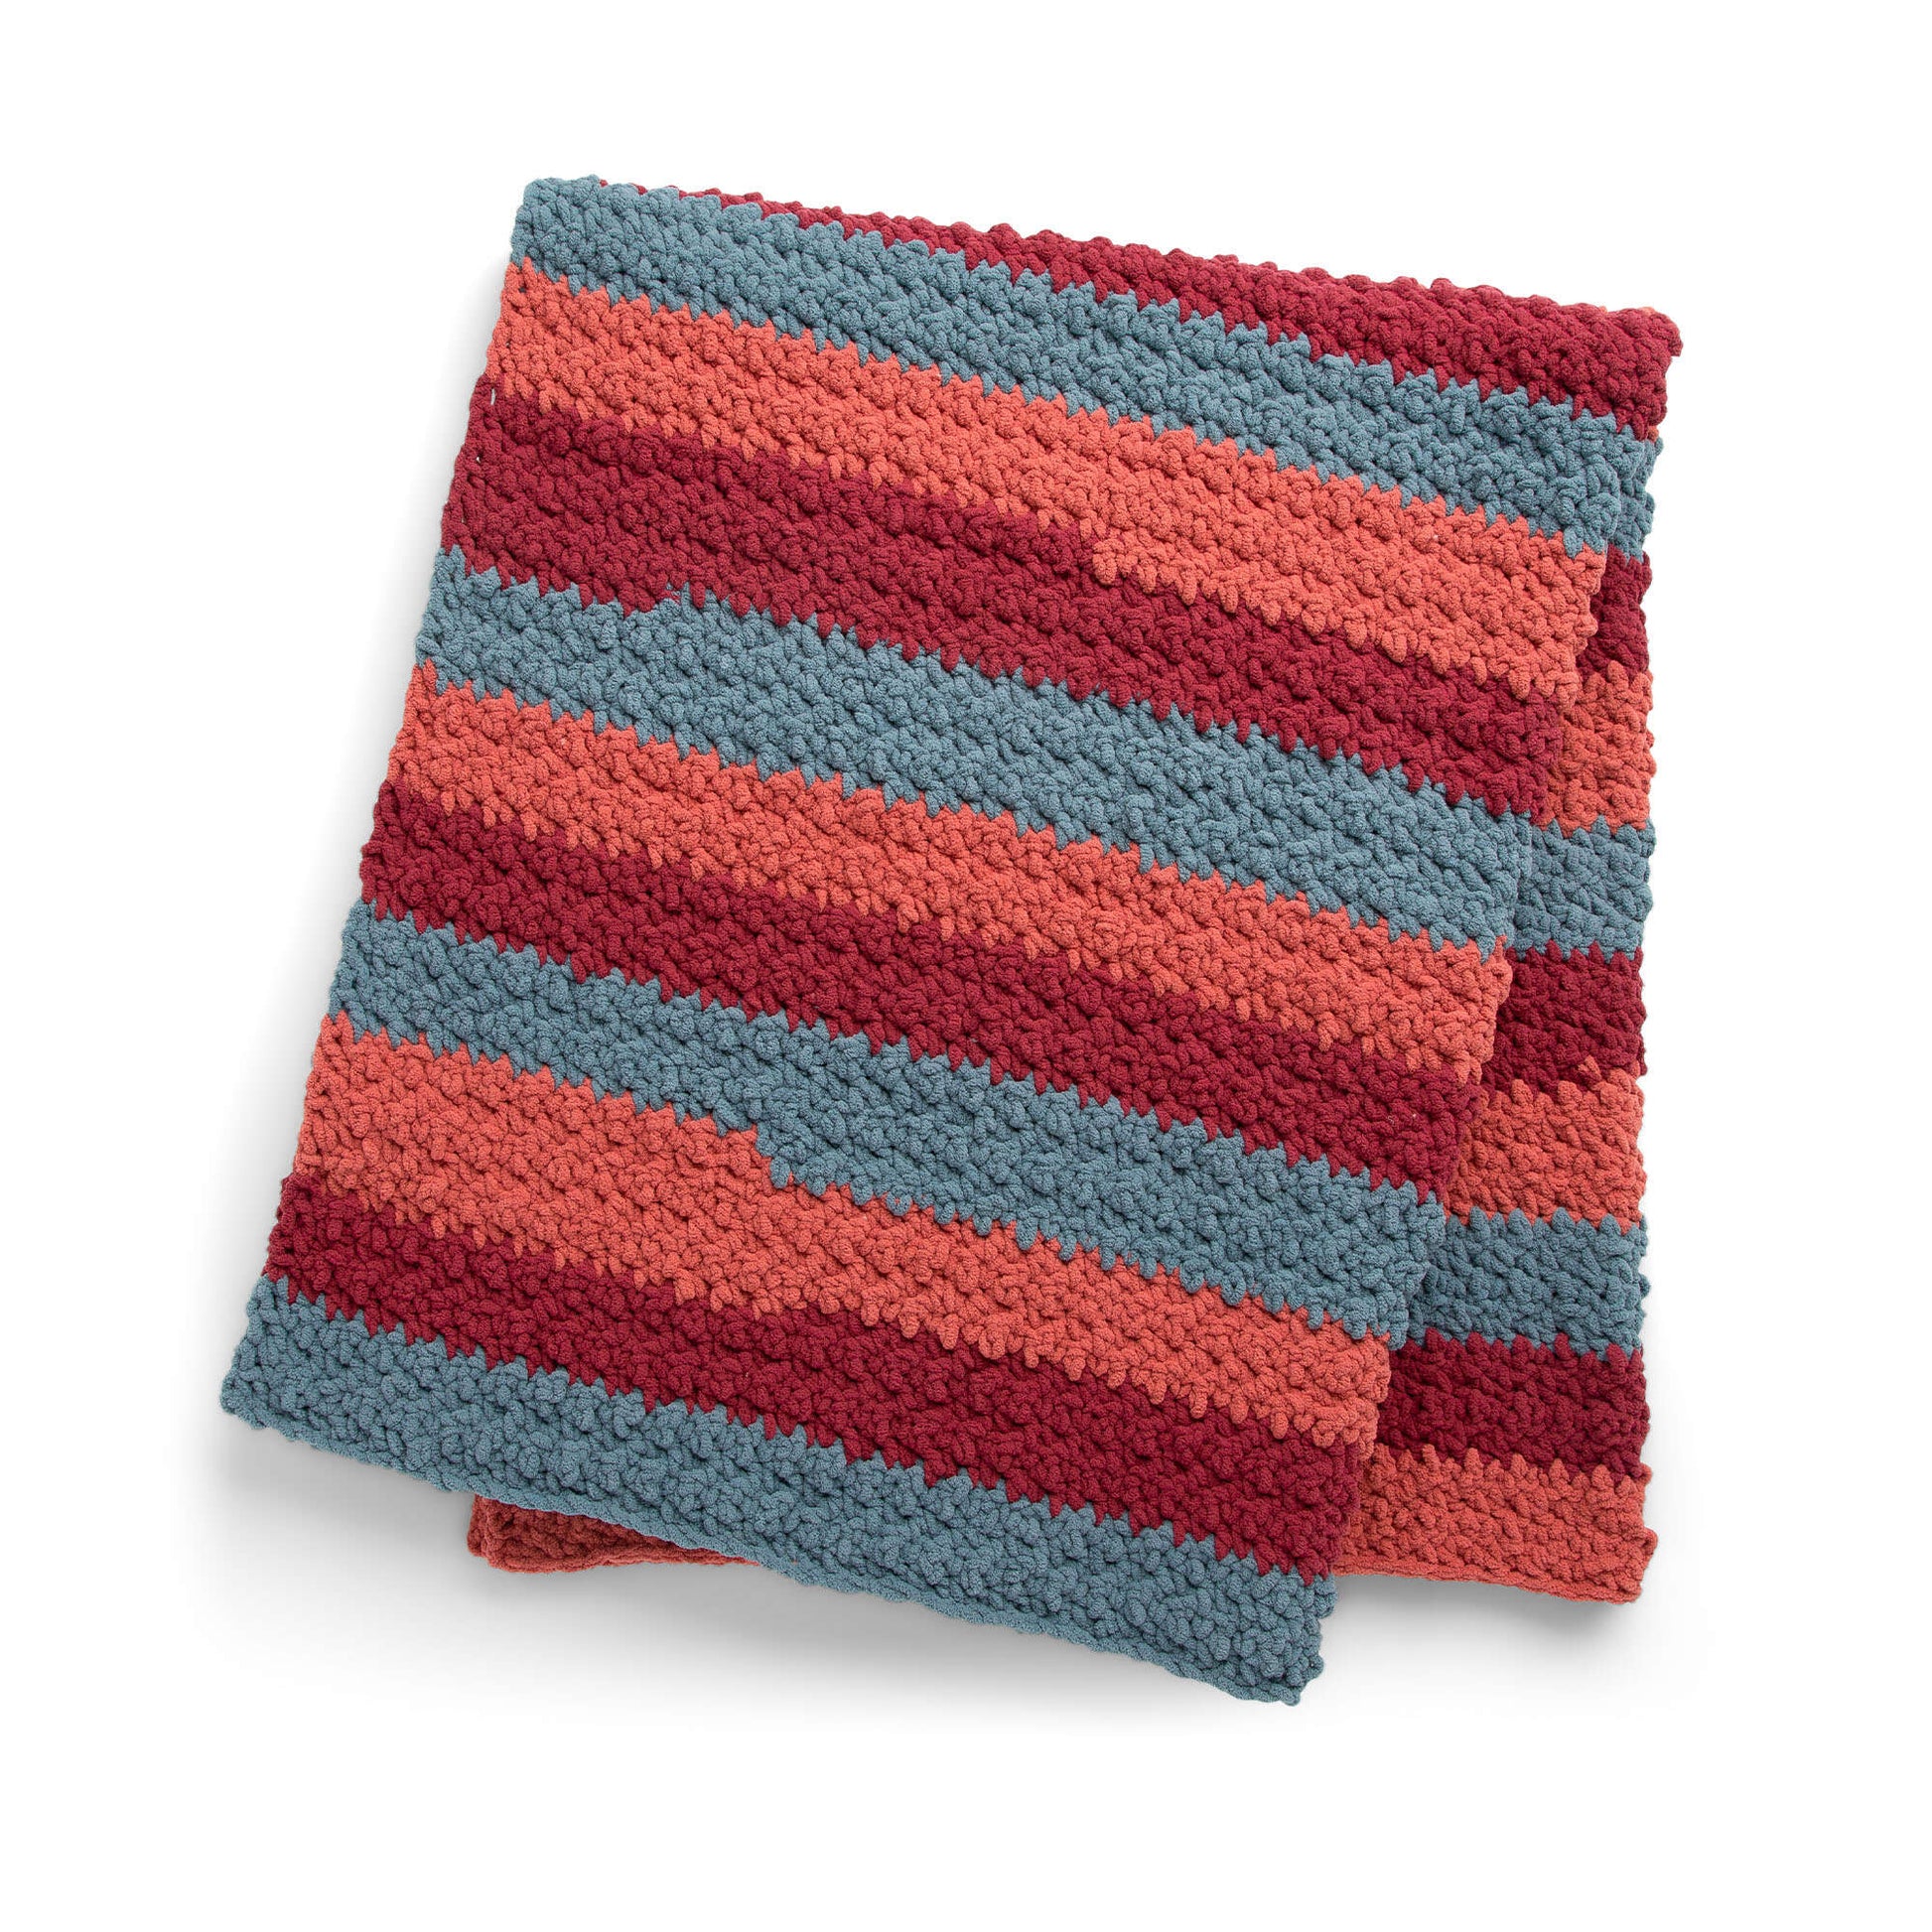 Free Bernat Color-Blocked Crochet Textured Knit Blanket Pattern